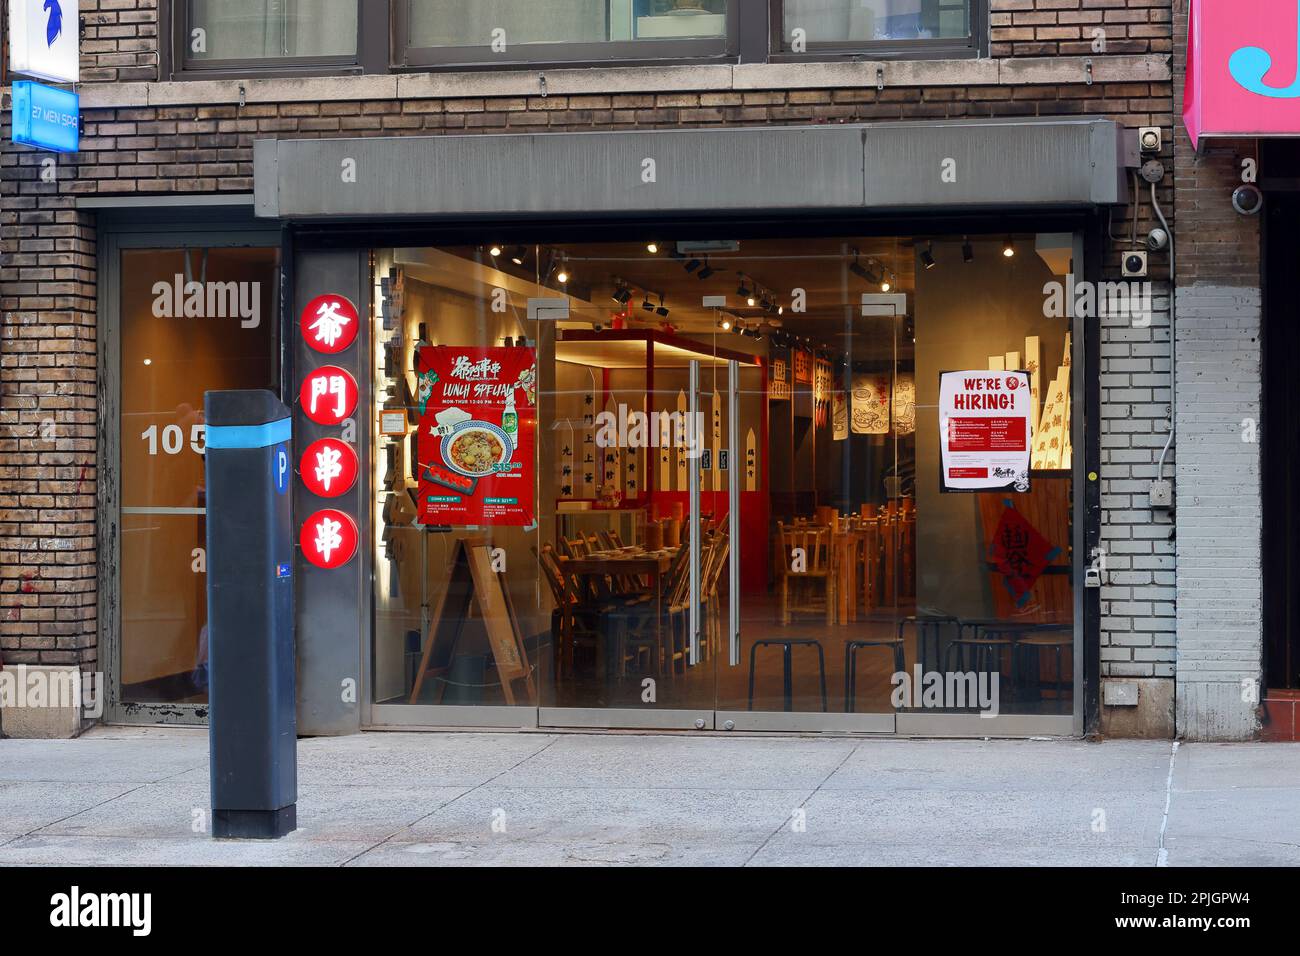 Yemen Chuanchuan 爺們串串, 105 W 27th St, New York, New York, New York foto di un ristorante cinese di cibo di strada cheungdu del Sichuan nel Chelsea di Manhattan Foto Stock